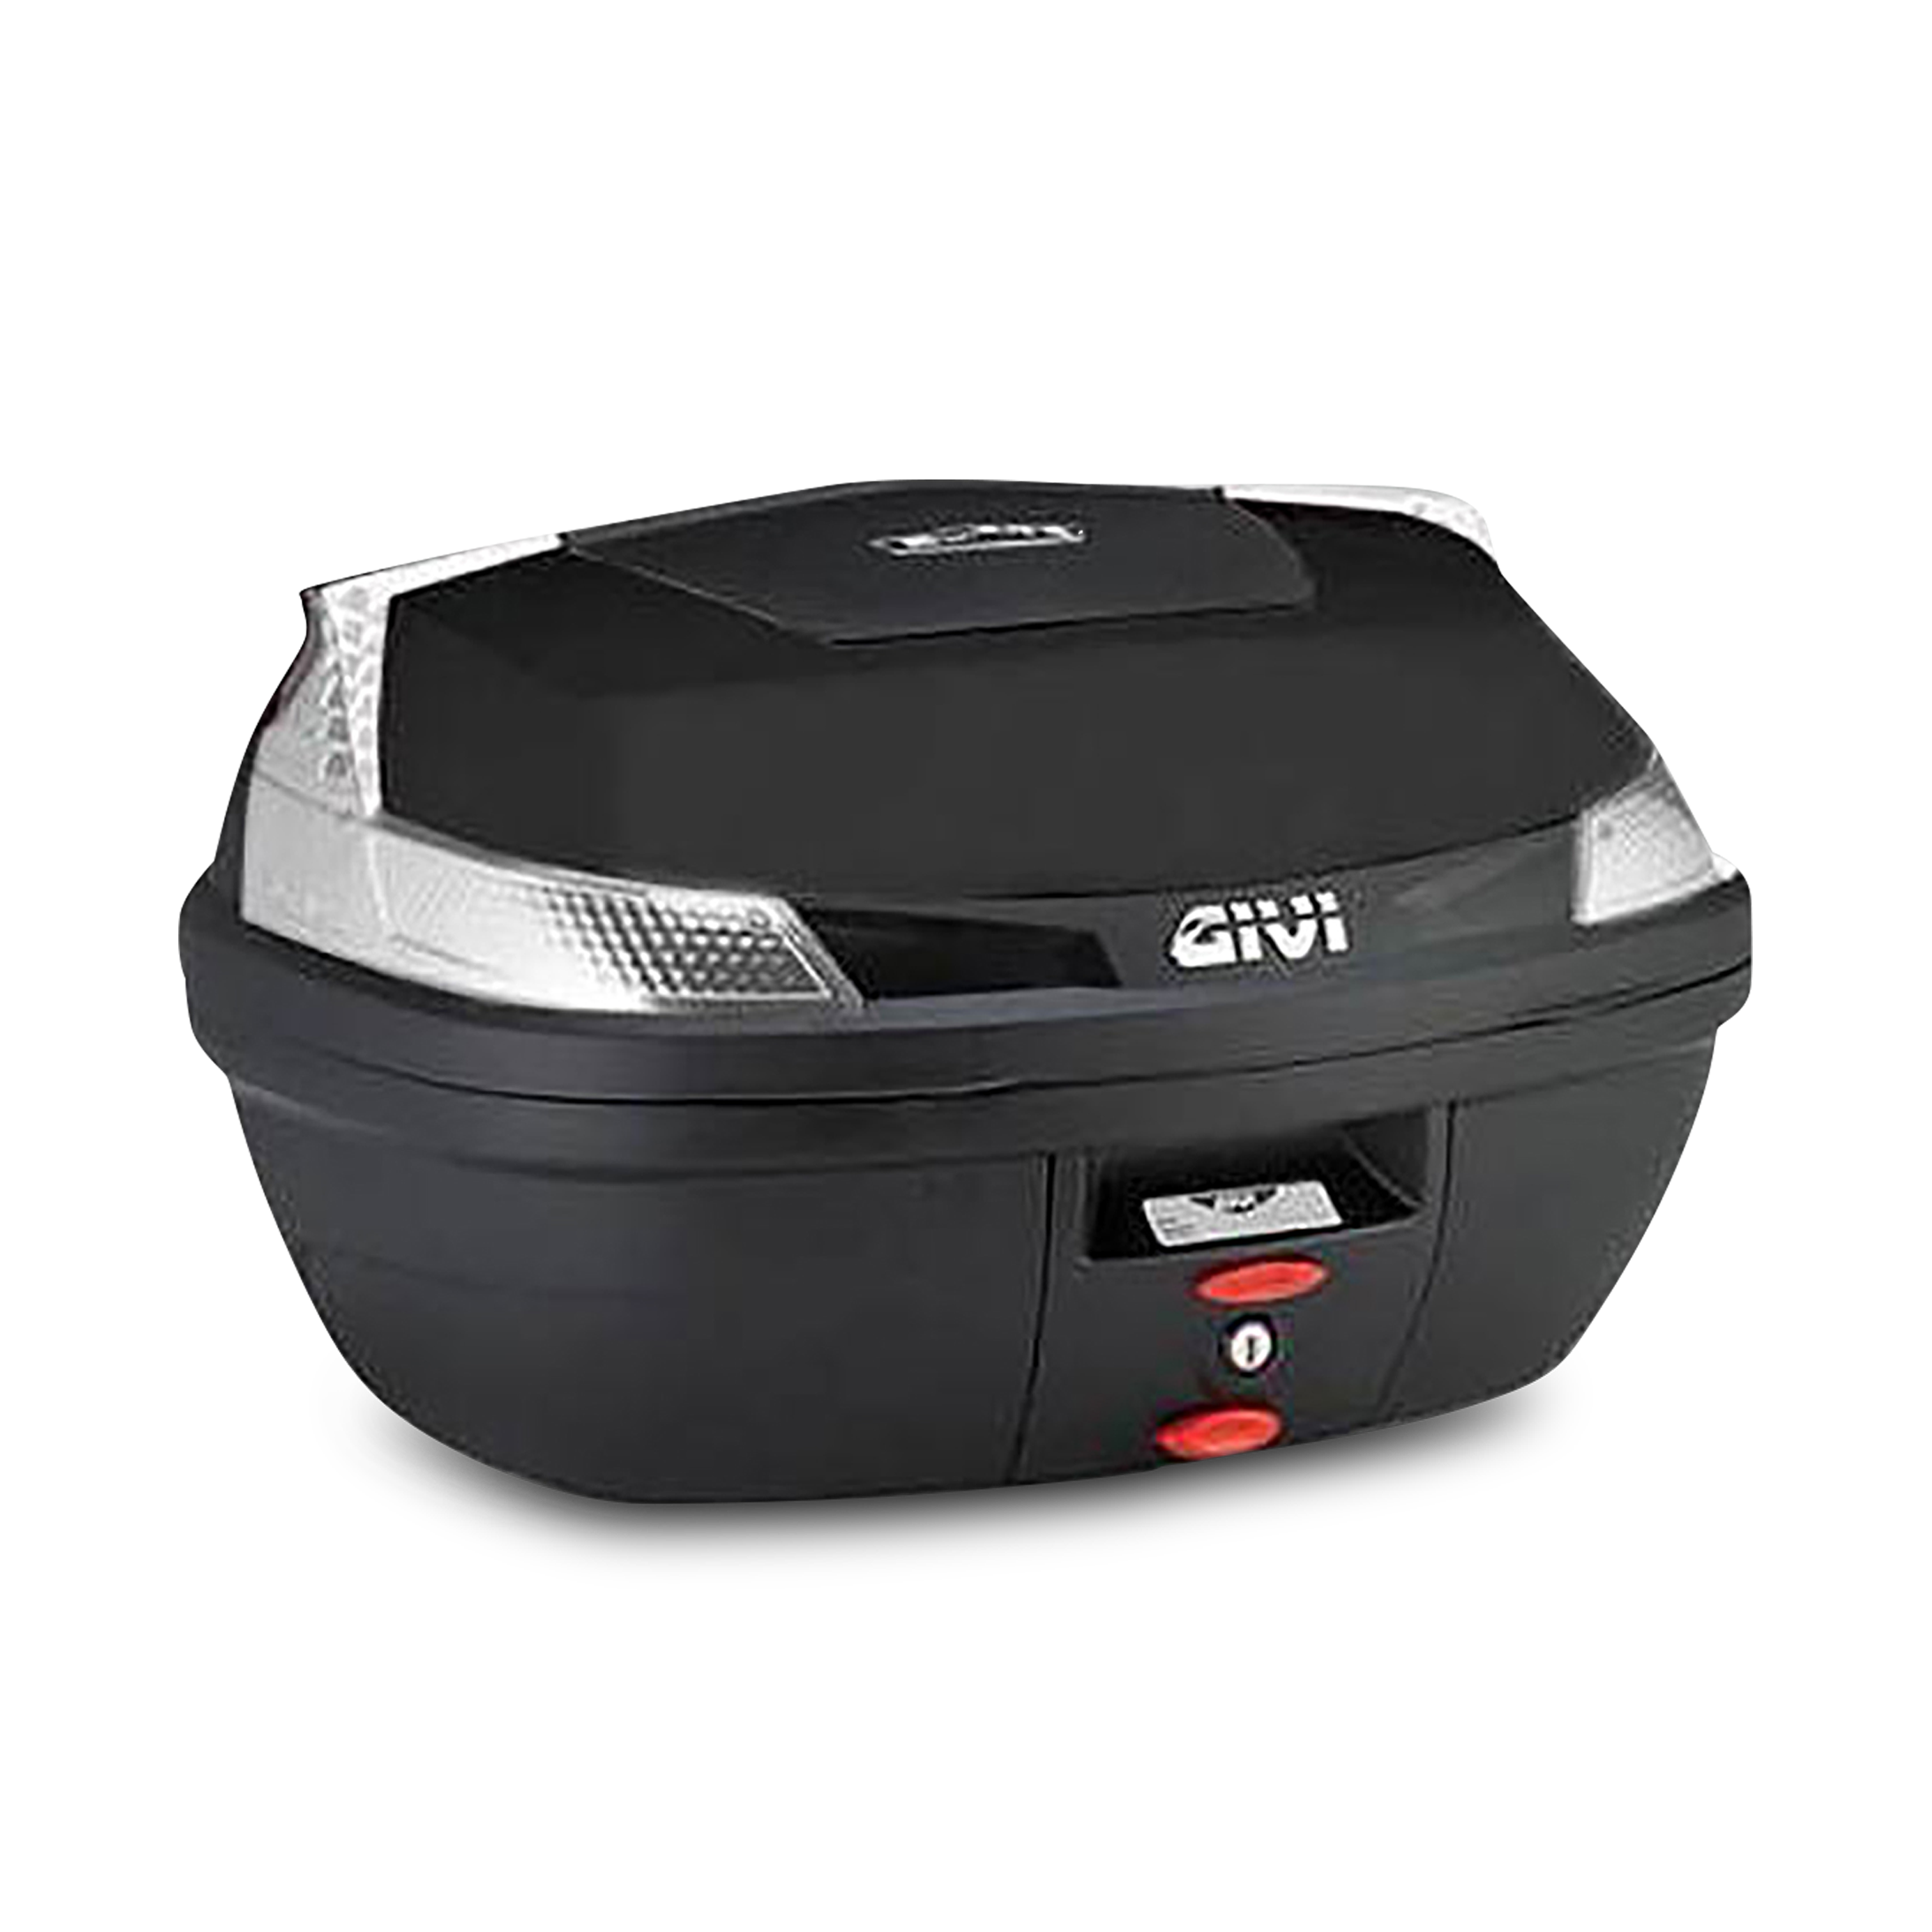 Givi Monolock® B47 Blade Tech Top Box - Buy now, get 23% off